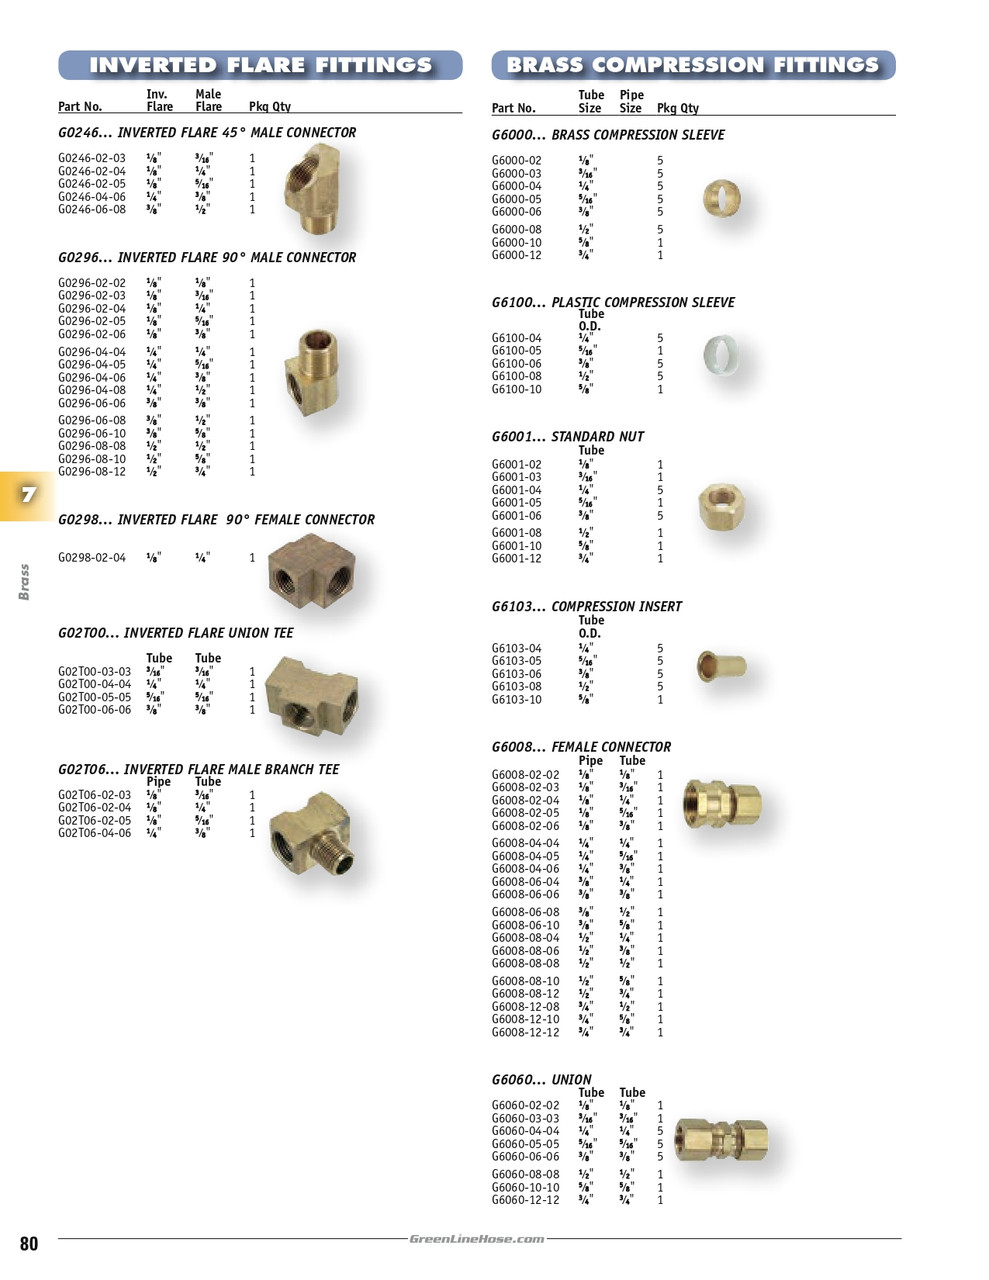 5/8" Brass Plastic Tube Compression Support Insert   G6103-10